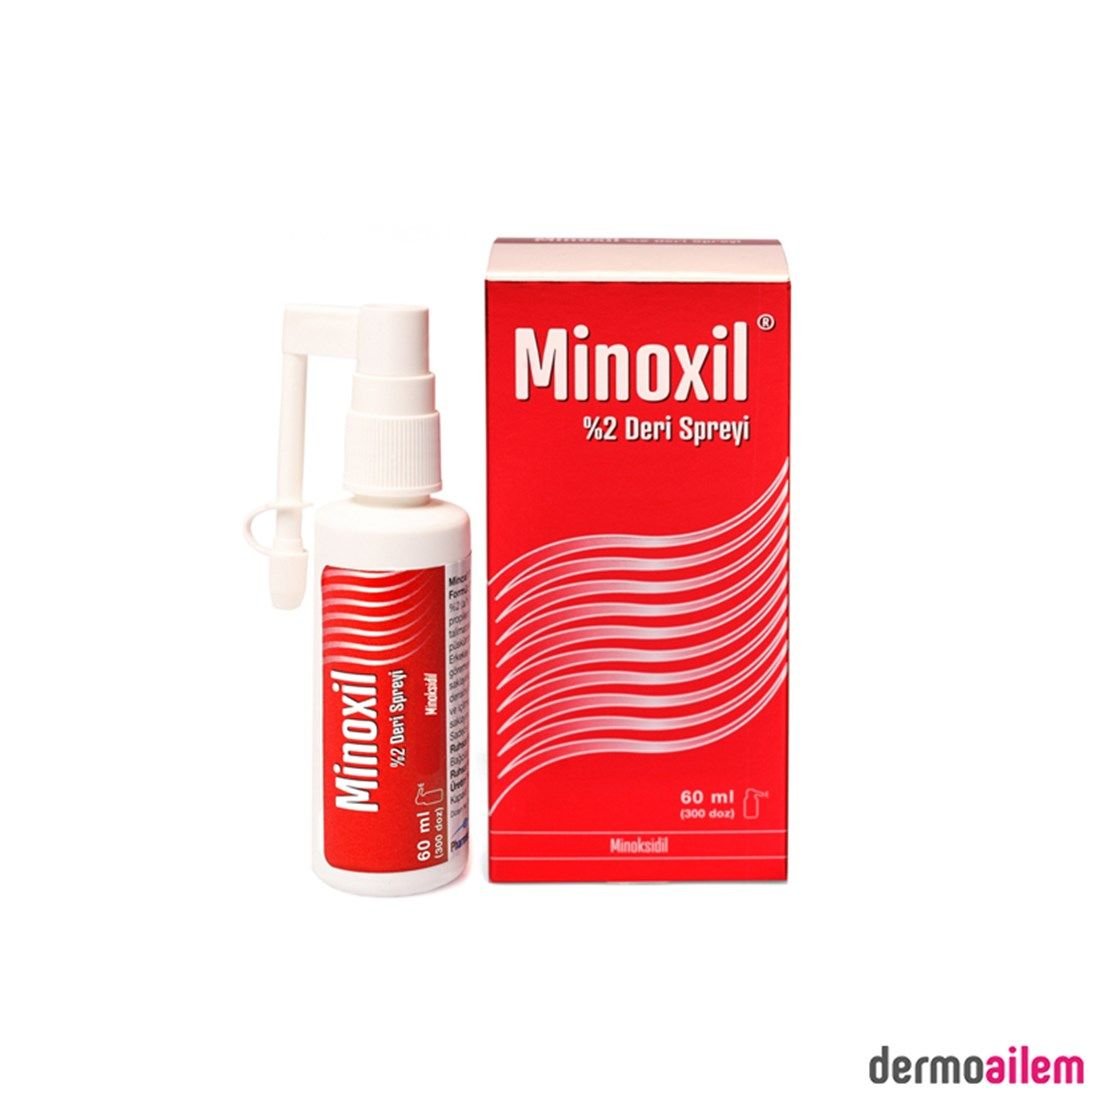 Minoxil %2 Deri Spreyi